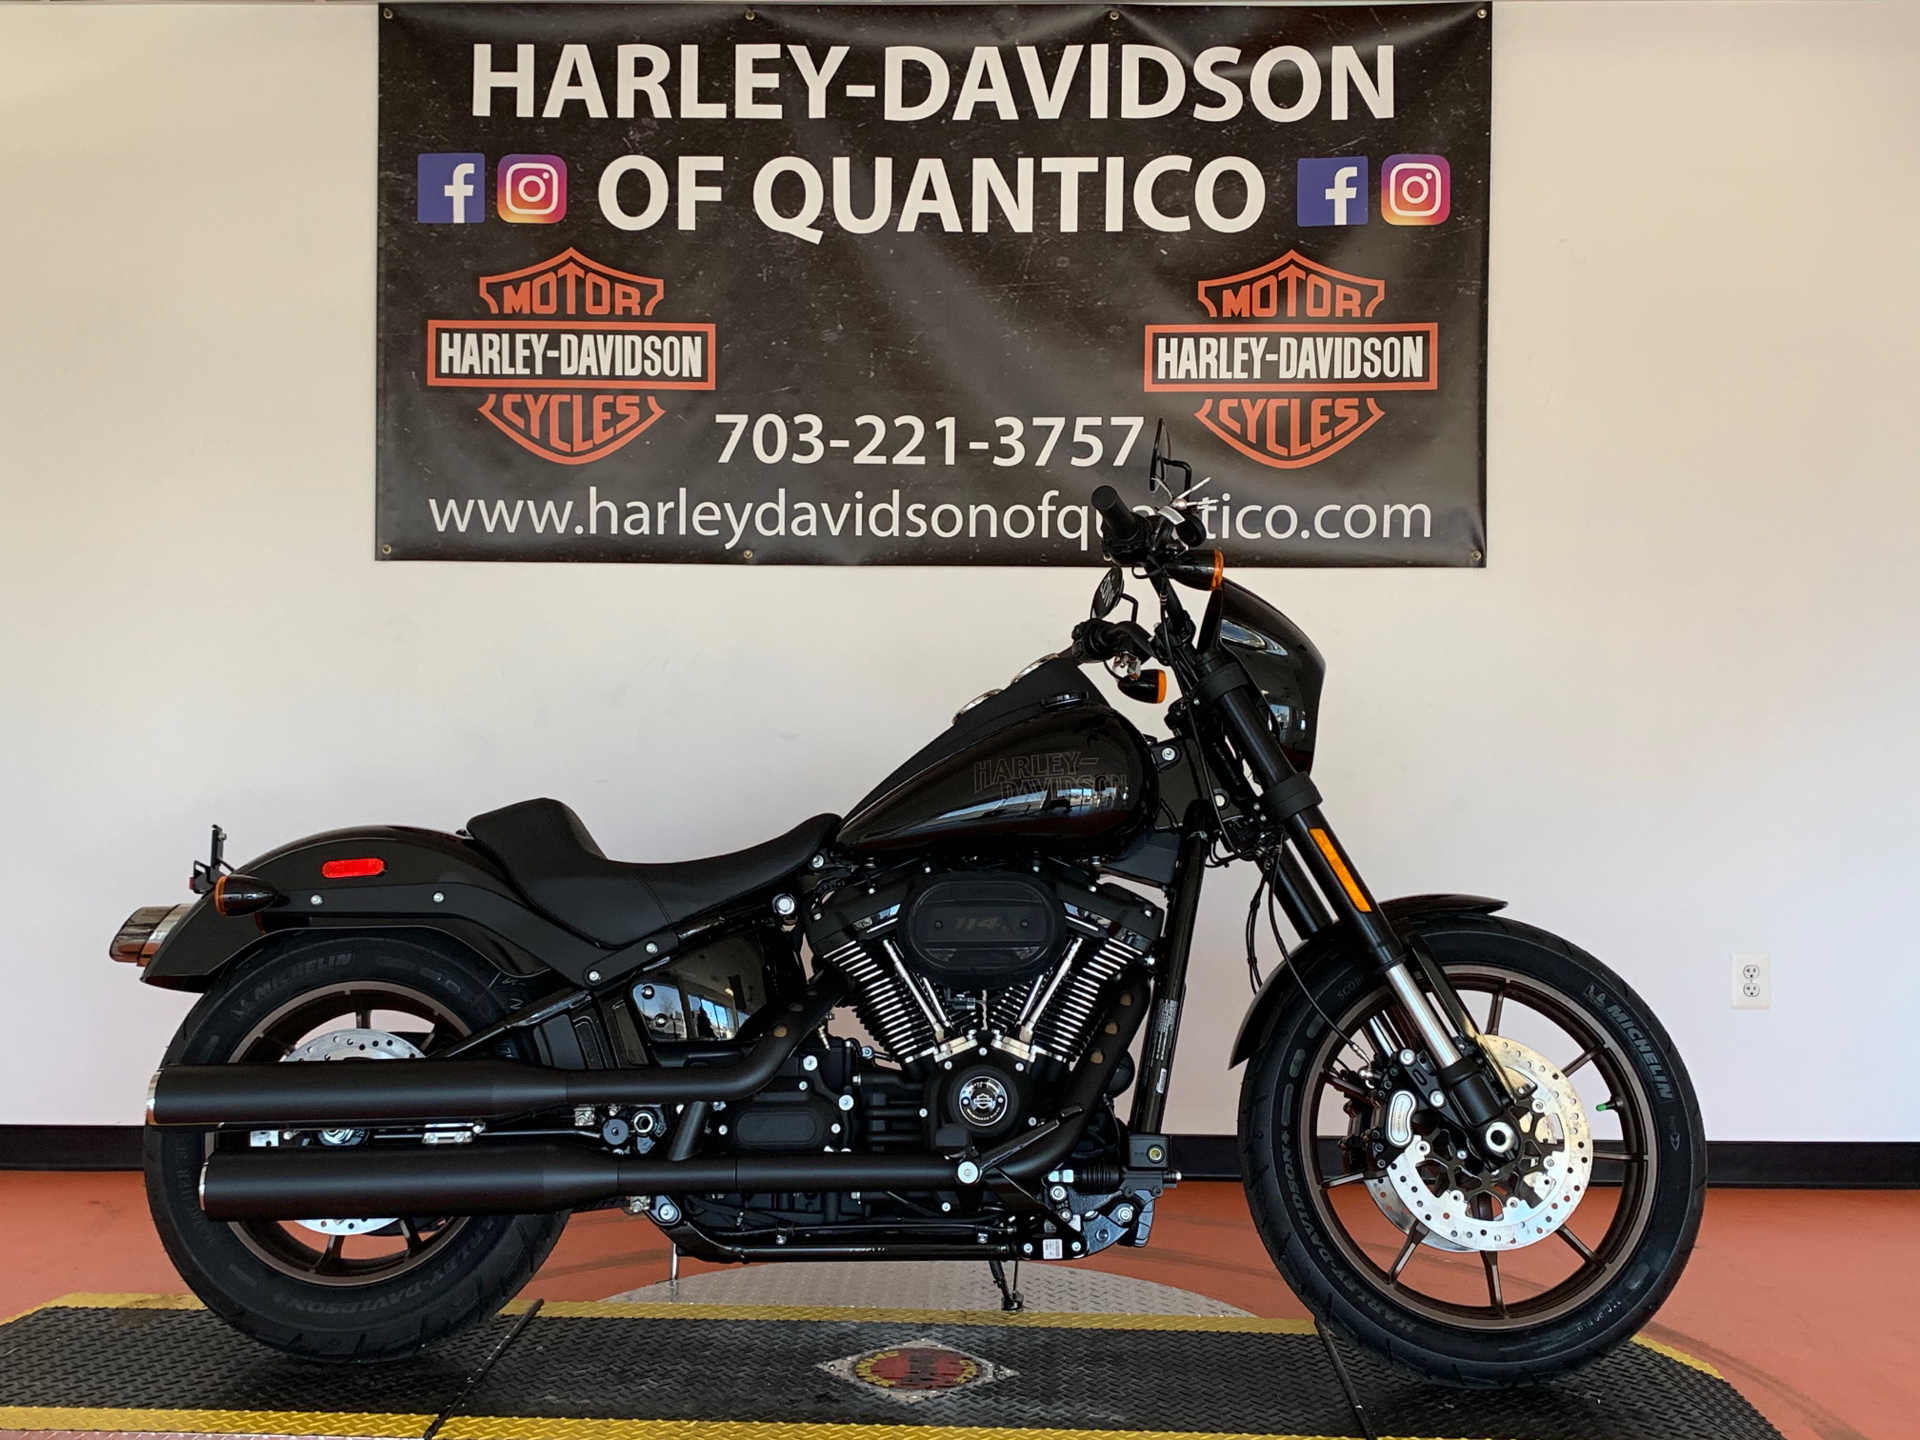 New 2021 Harley Davidson Low Rider S Black Motor Bikes In Dumfries Va 012871